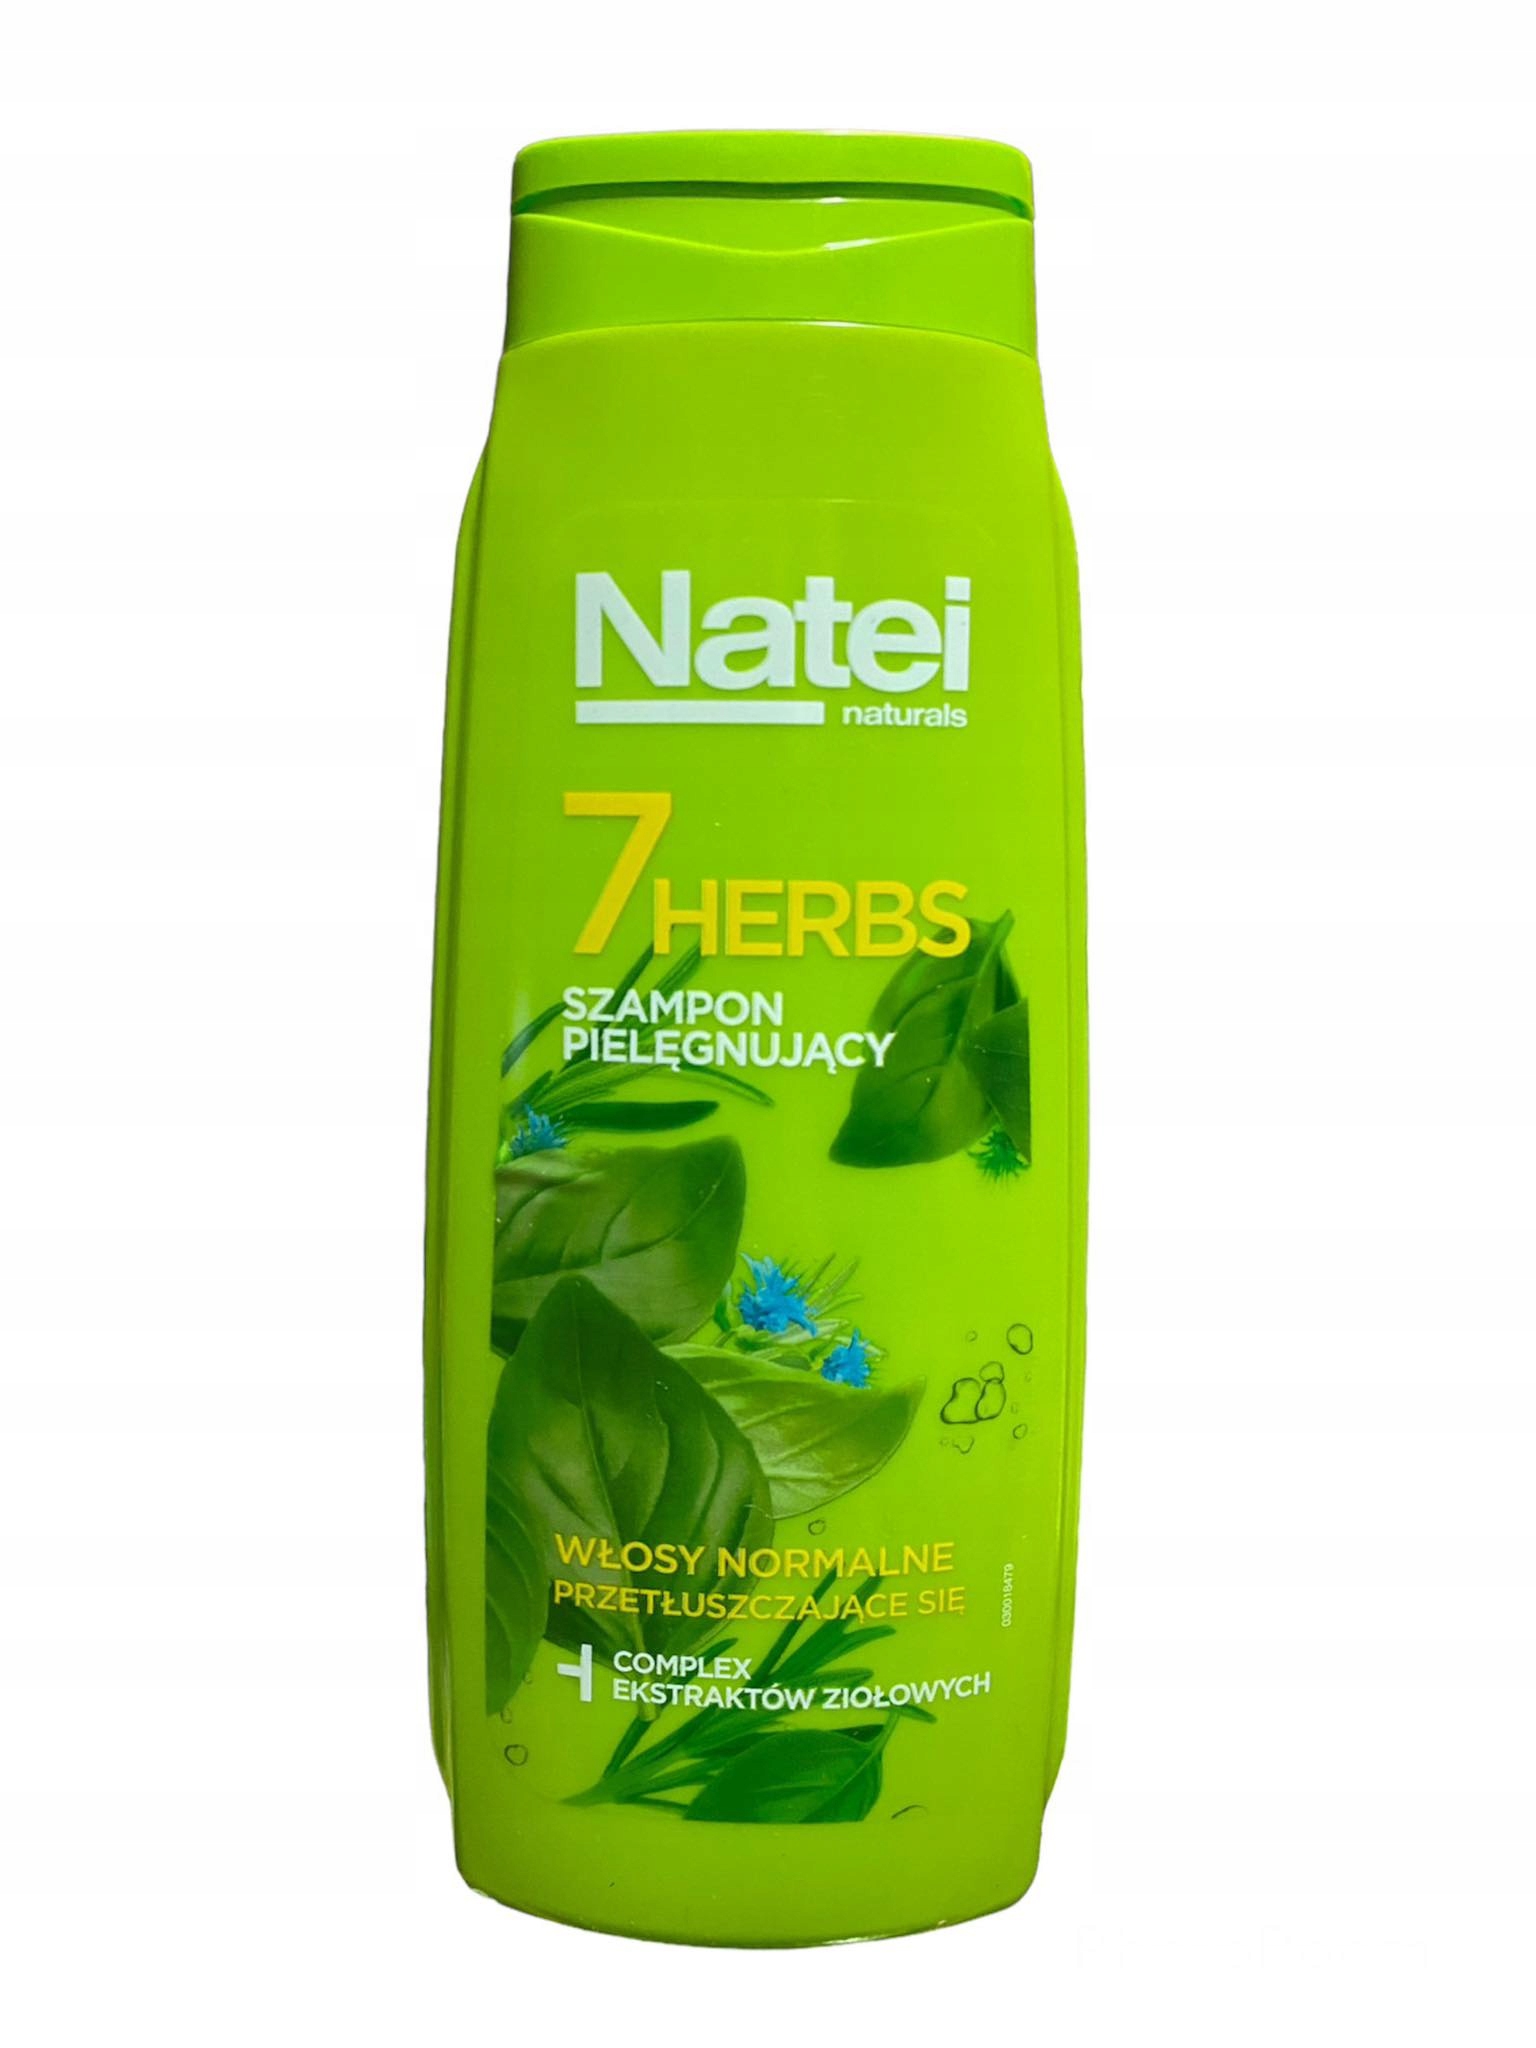 natei naturals szampon